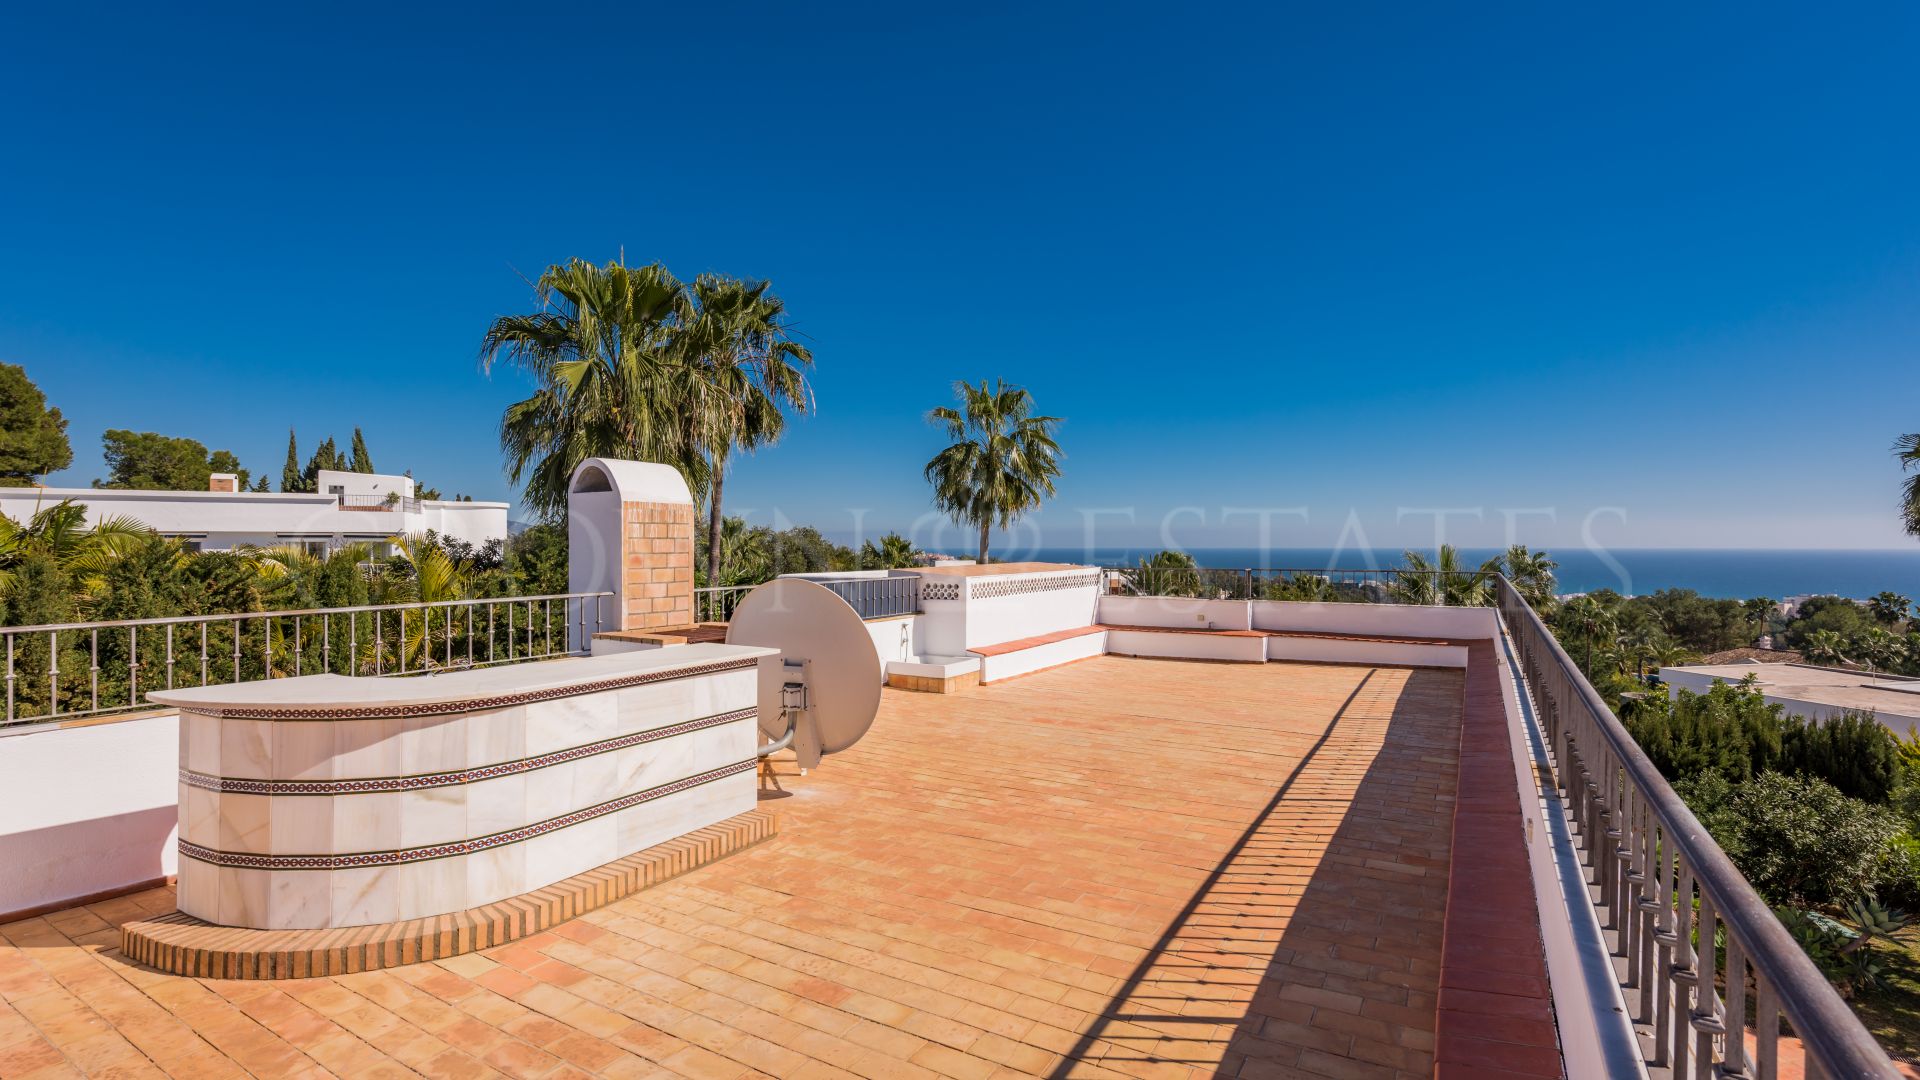 Villa in the private gated community of Altos Reales Marbella